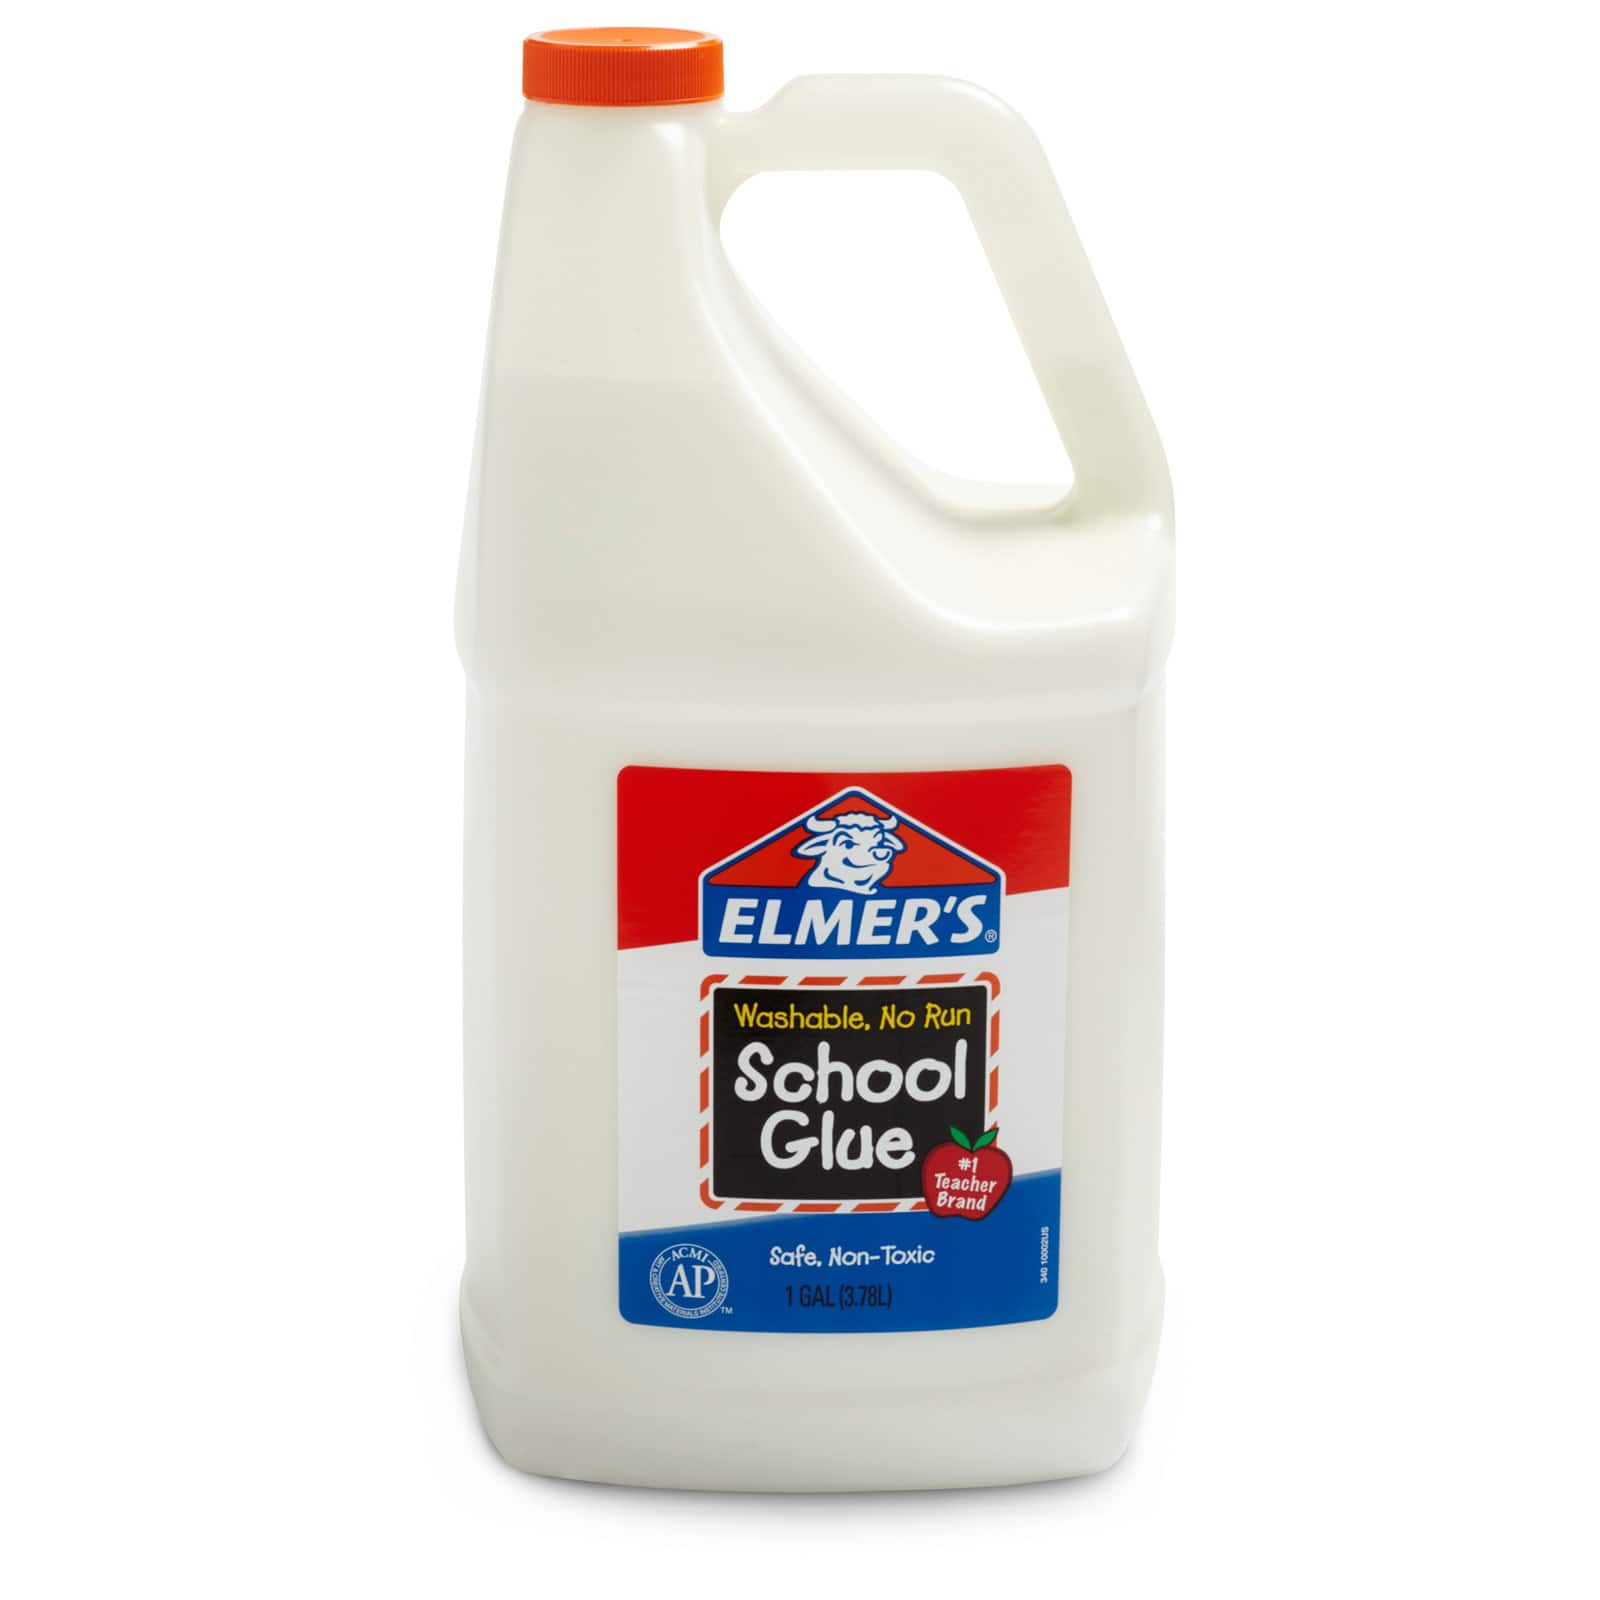 Colorations® White School Glue, 4oz - 6 Bottles